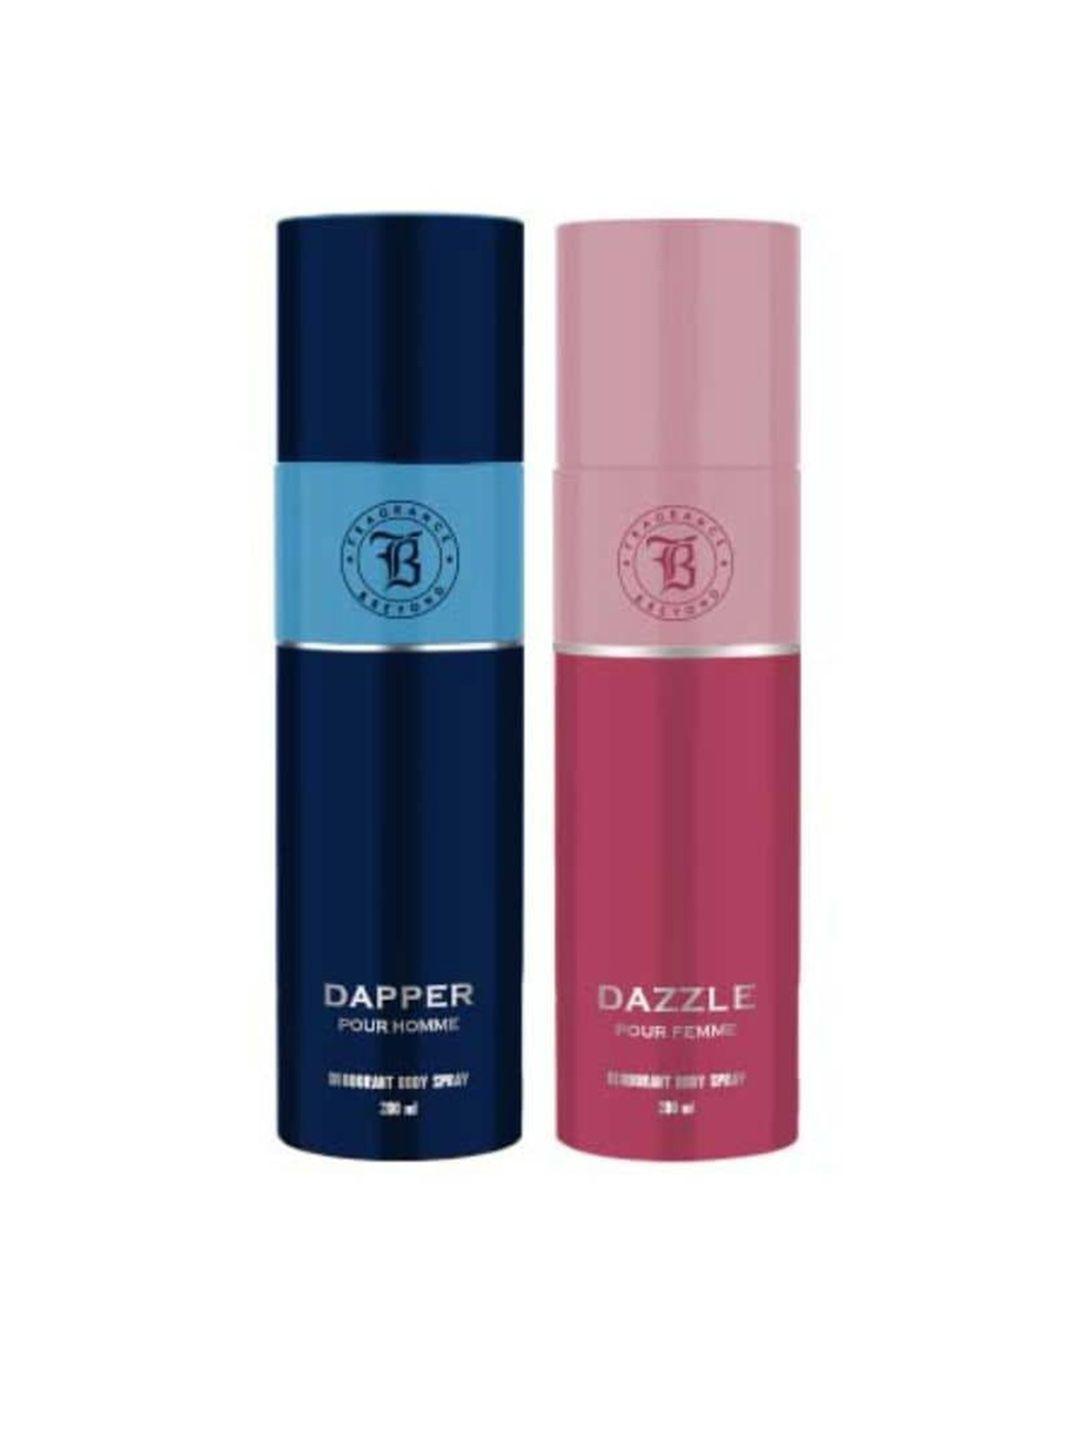 fragrance & beyond set of men dapper & women dazzle deodorant body sprays - 200 ml each